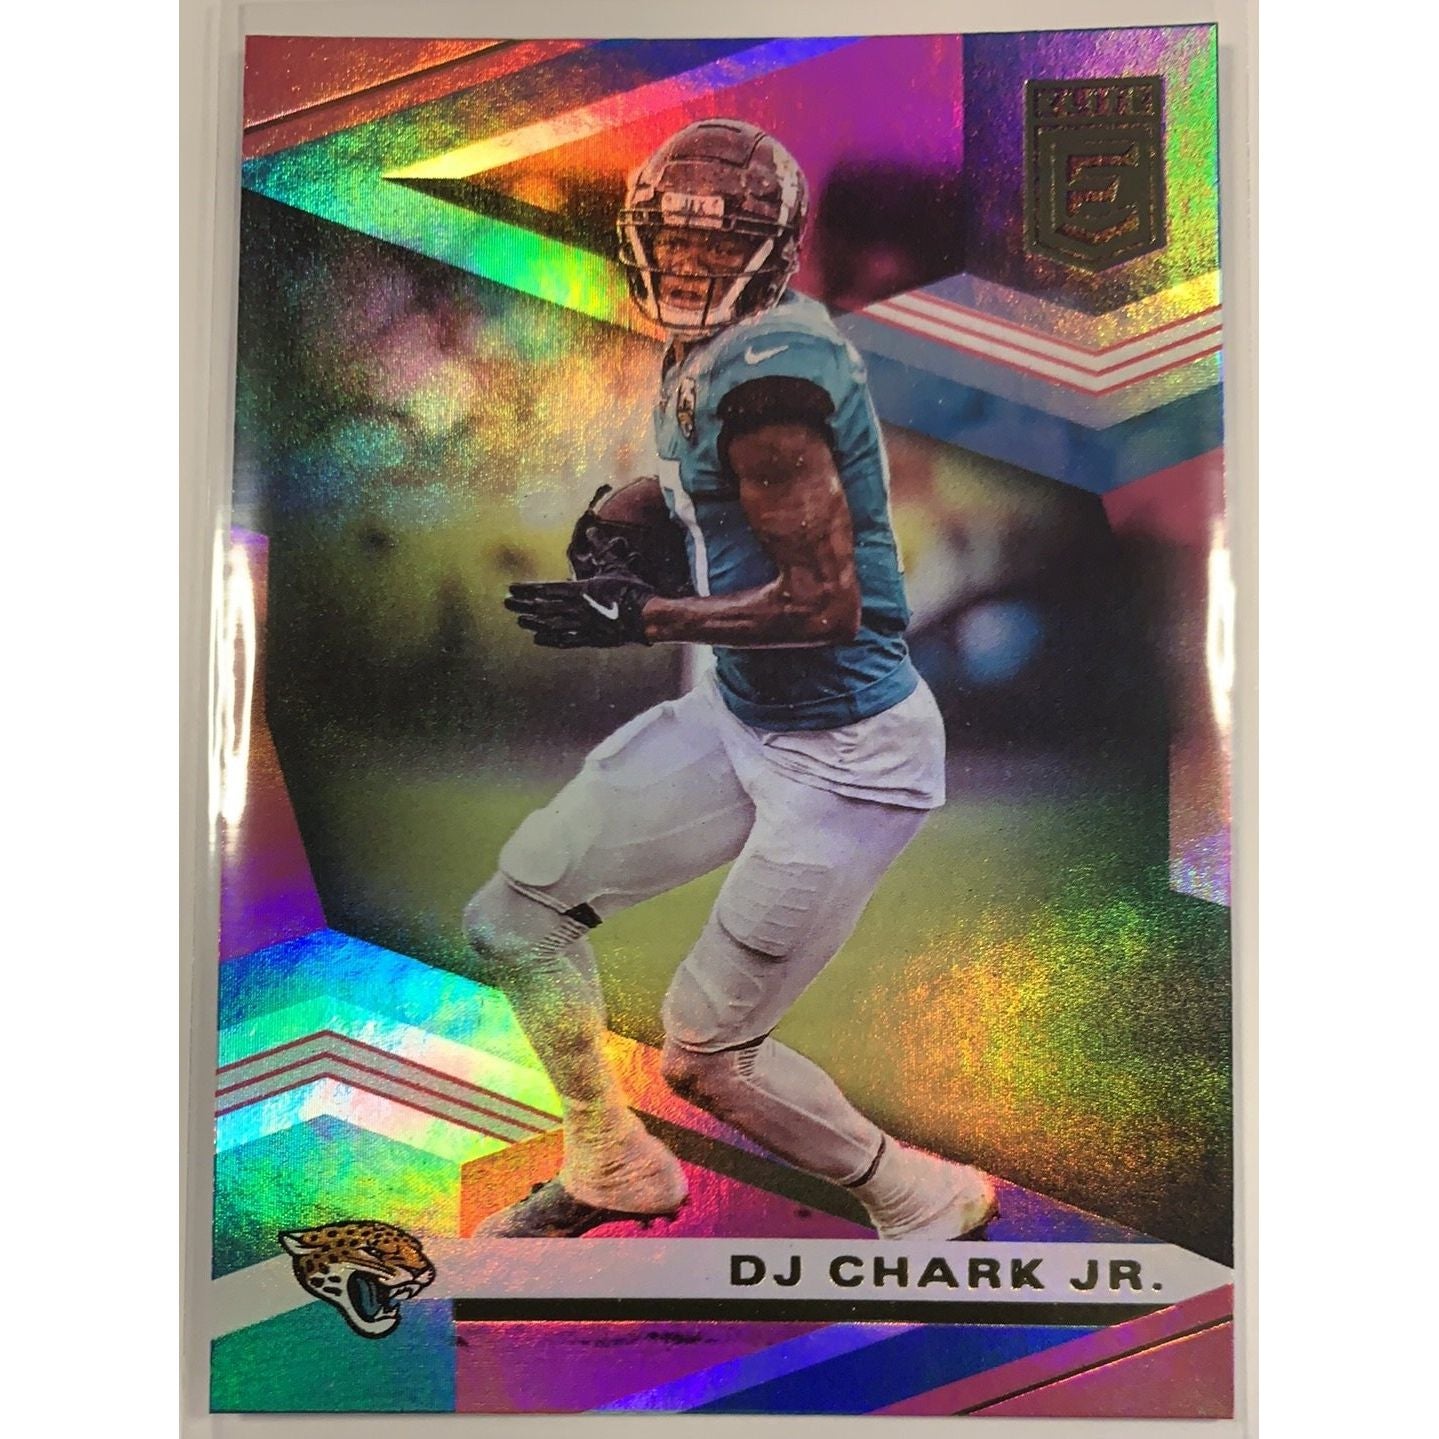  2020 Donruss Elite DJ Chark Jr. Pink Parallel  Local Legends Cards & Collectibles